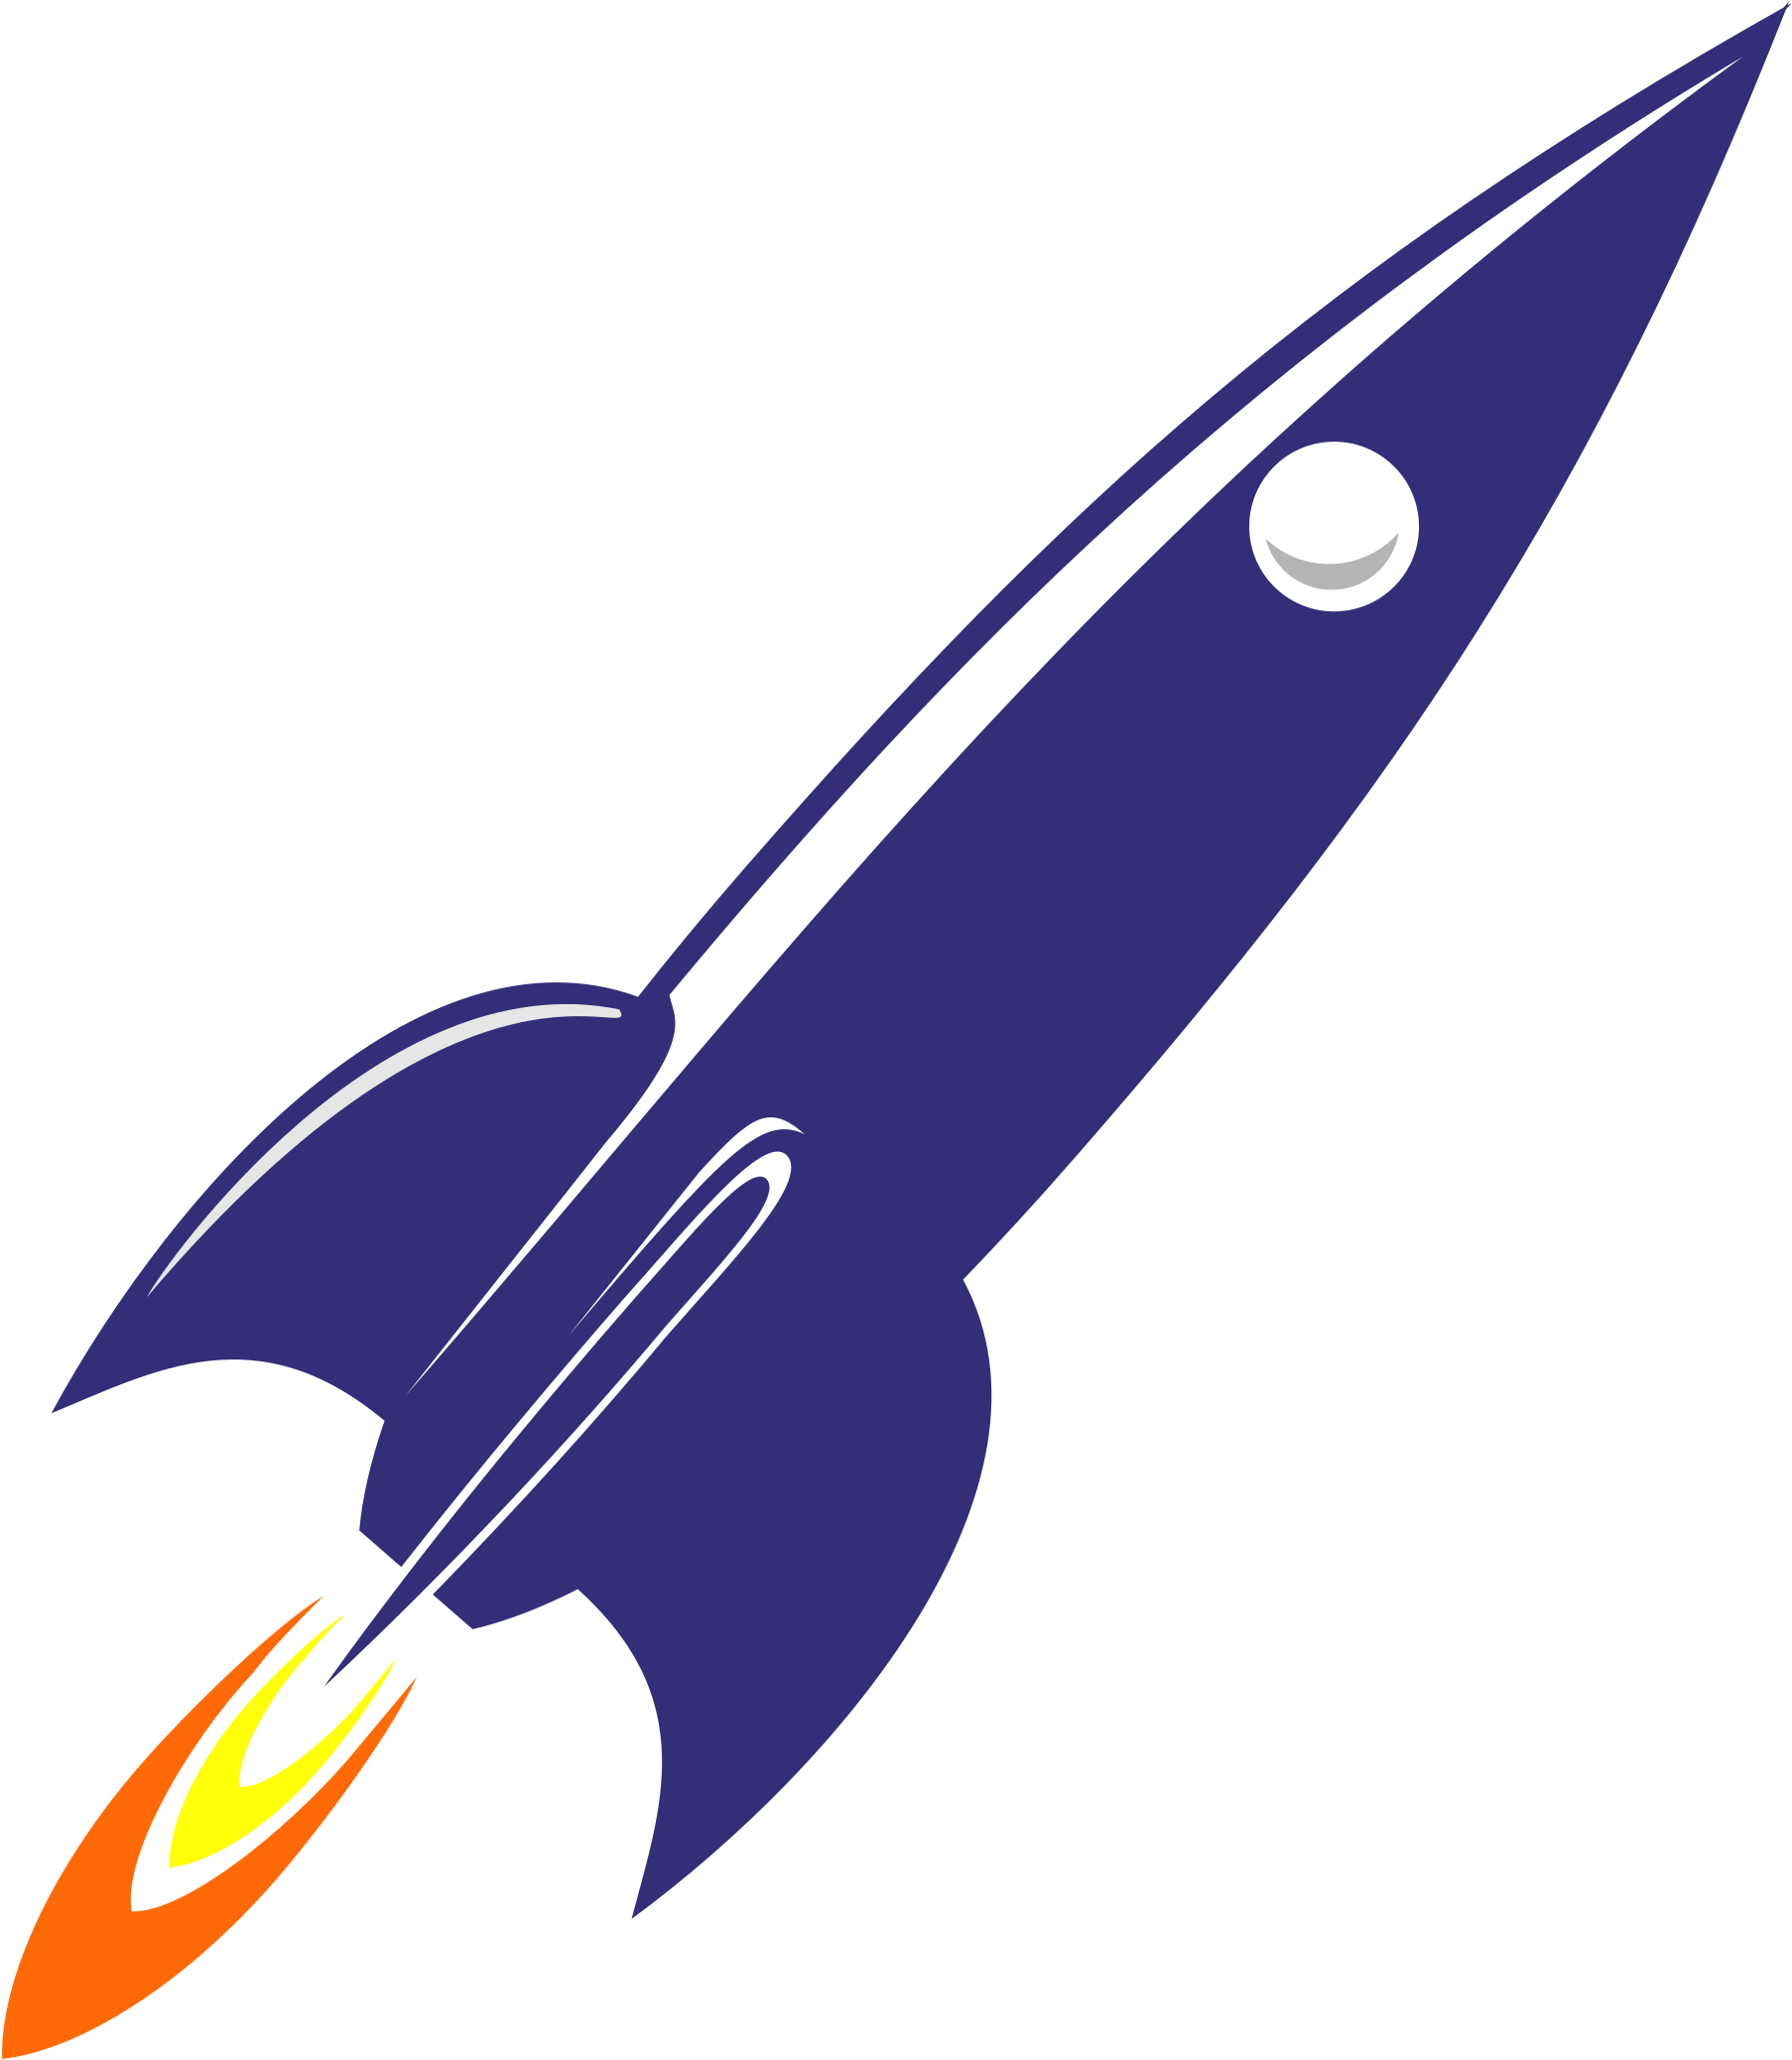 Is For Rocket - Neshoba Central High School (2095x2400)